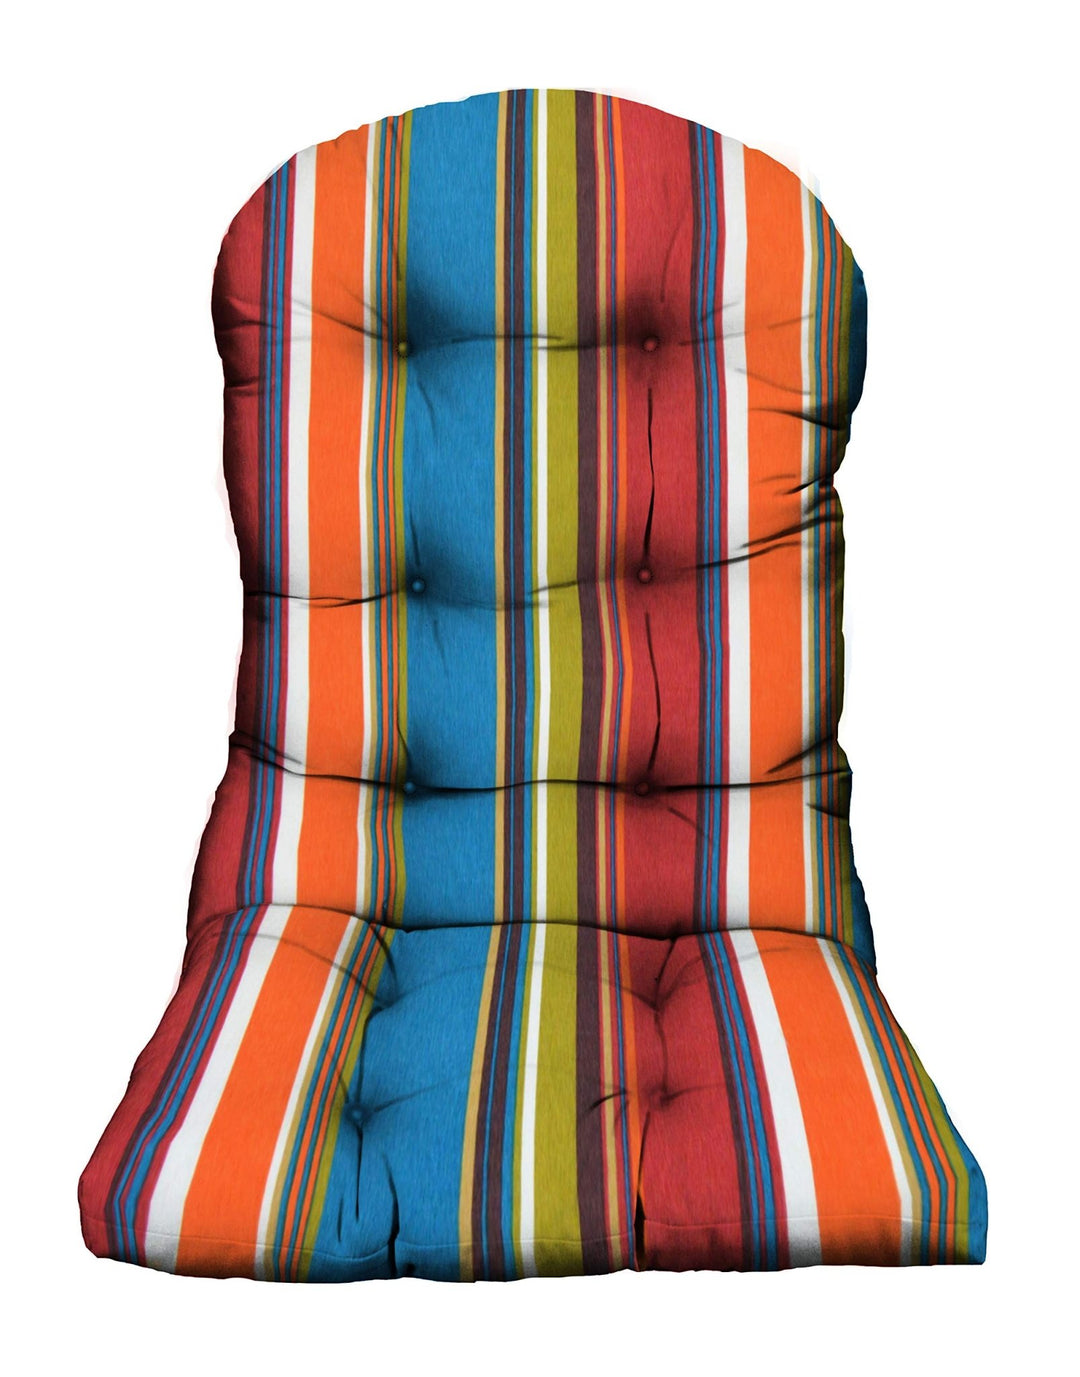 Adirondack Cushion, Tufted, 42.5" H x 21" W, Polyester Westport Teal - RSH Decor